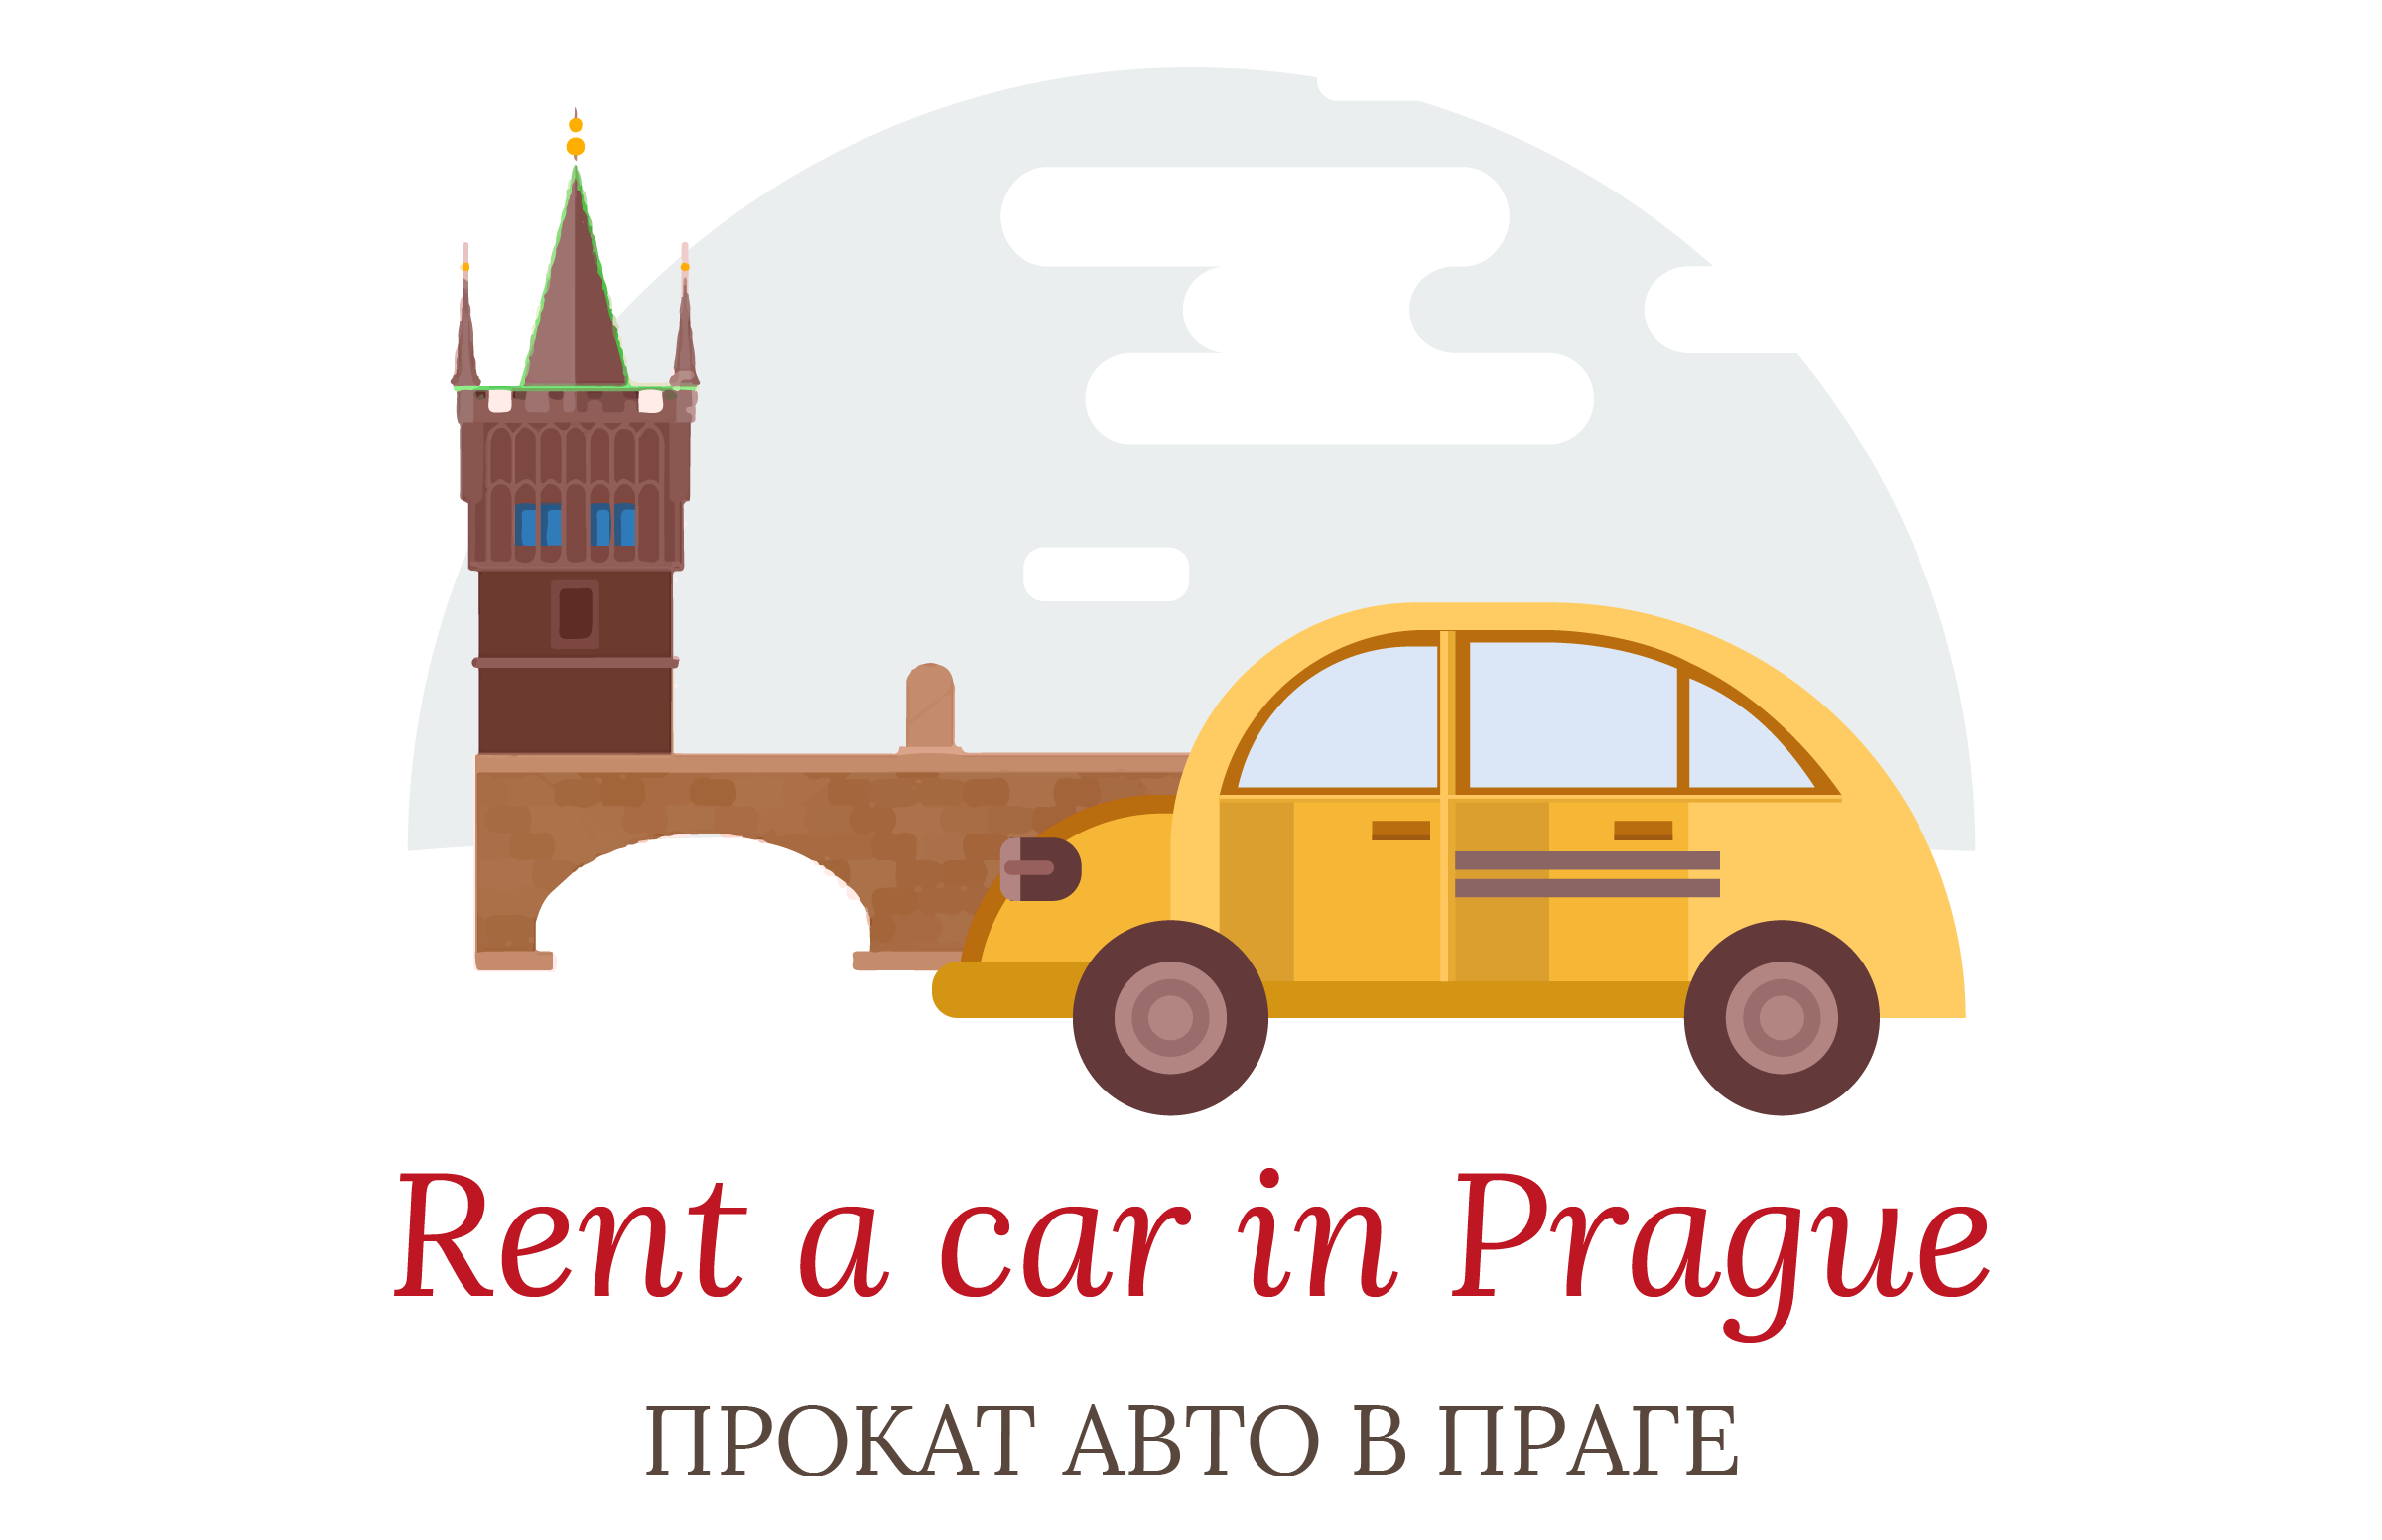 Заказть логотип, прокат авто Прага. Дизайн-Сити